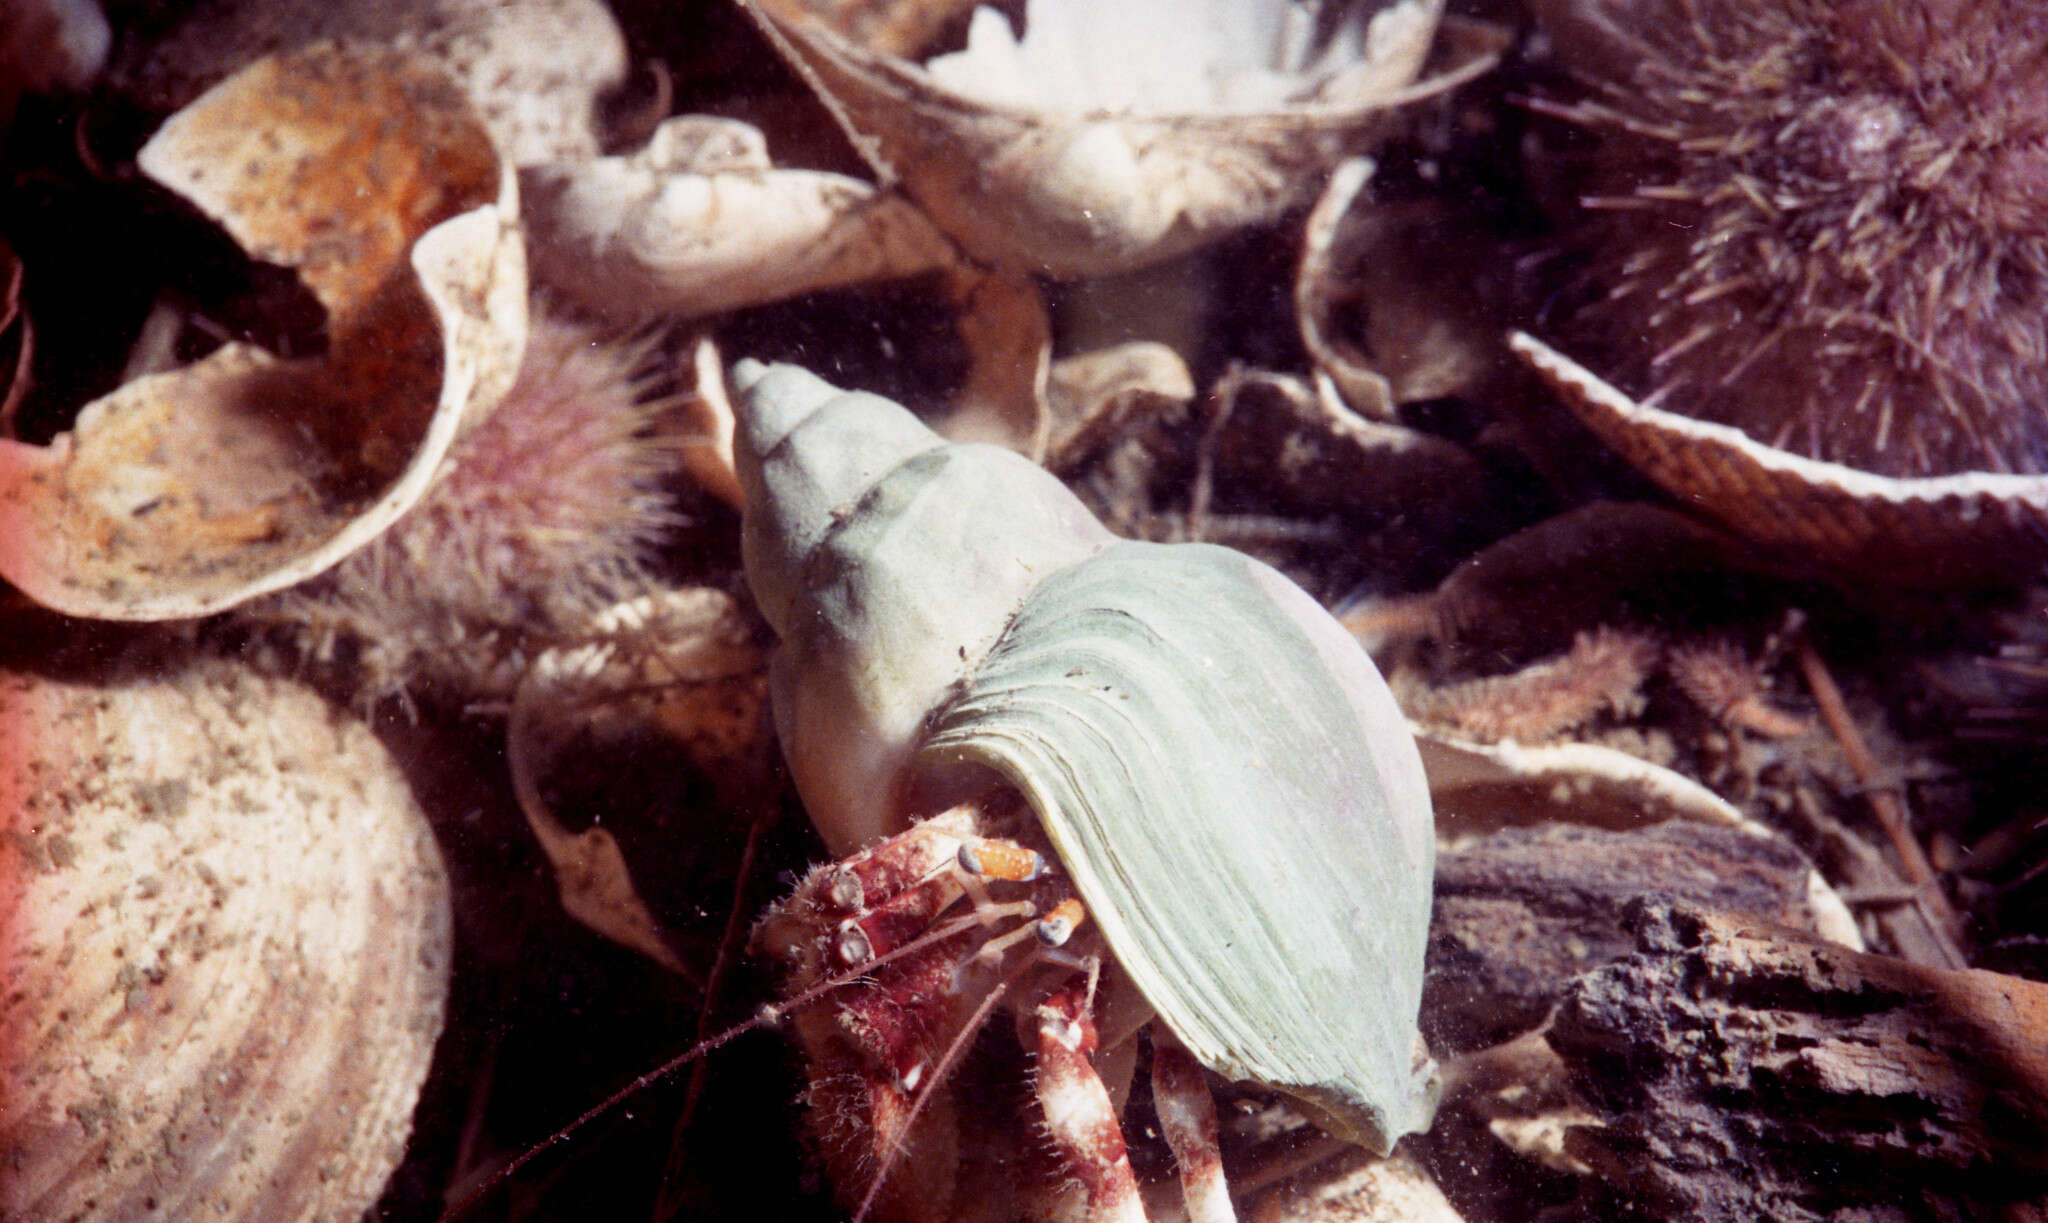 Image of downy hermit crab